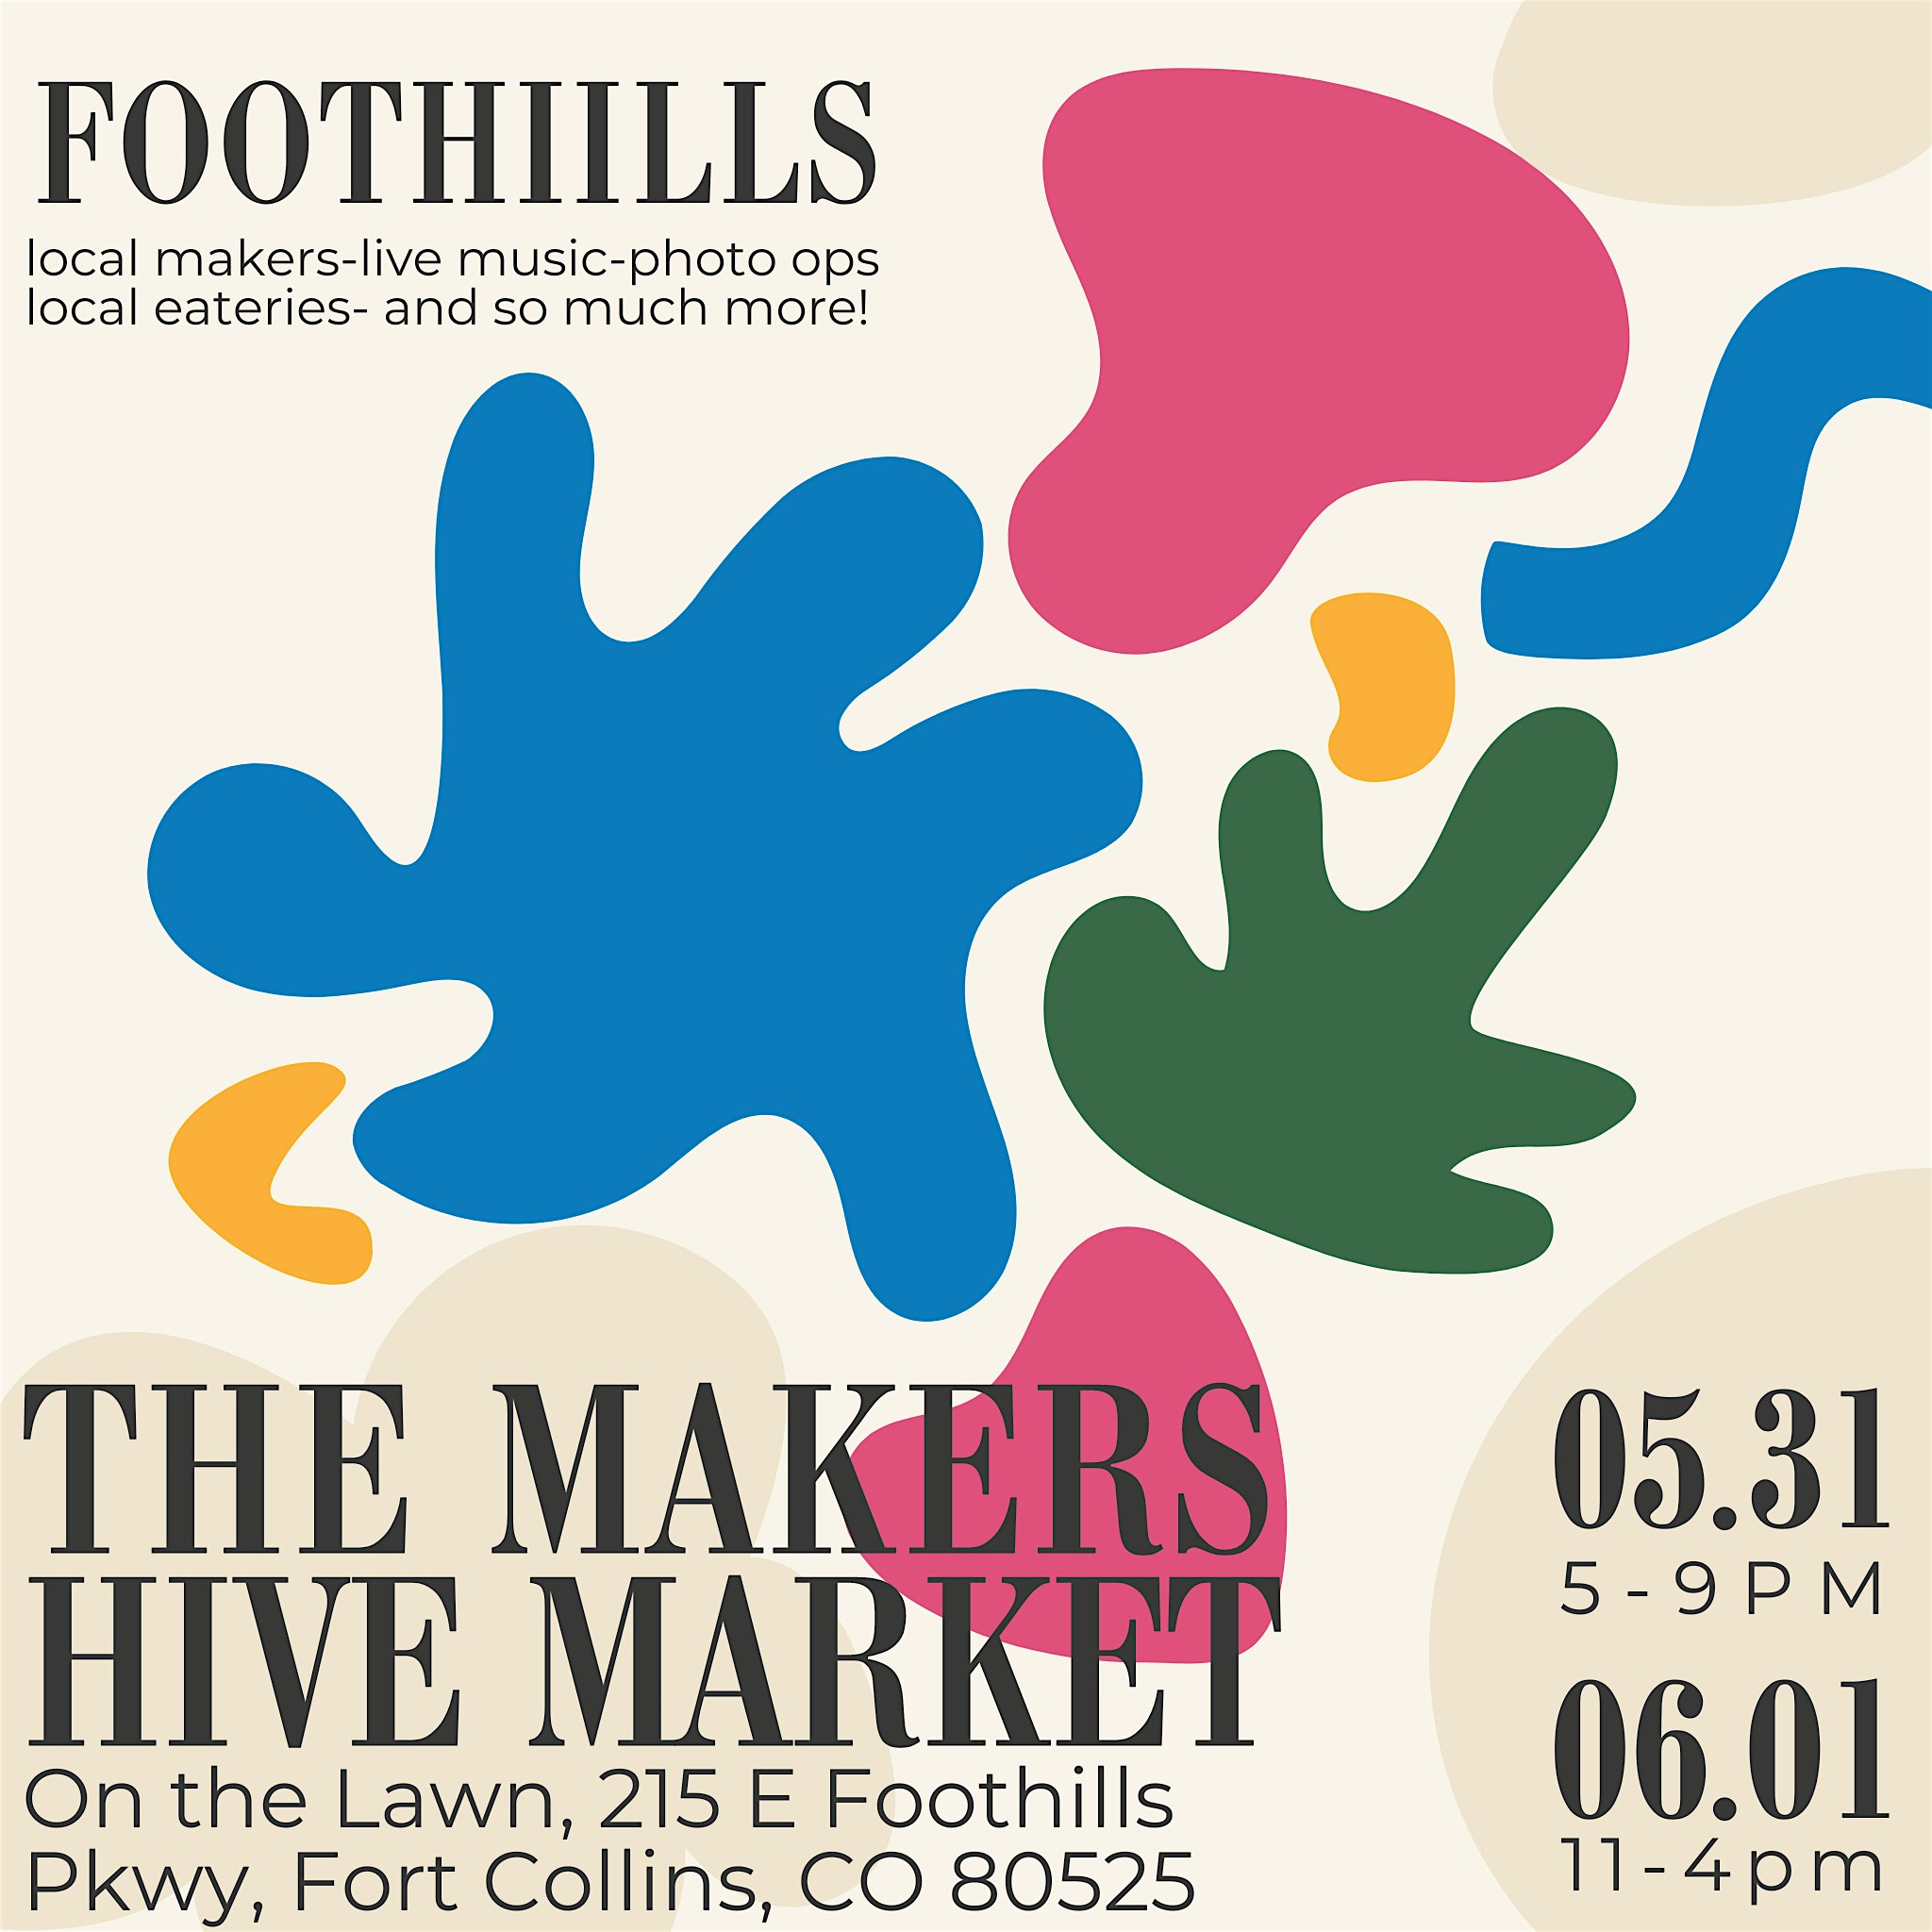 Makers Hive Market